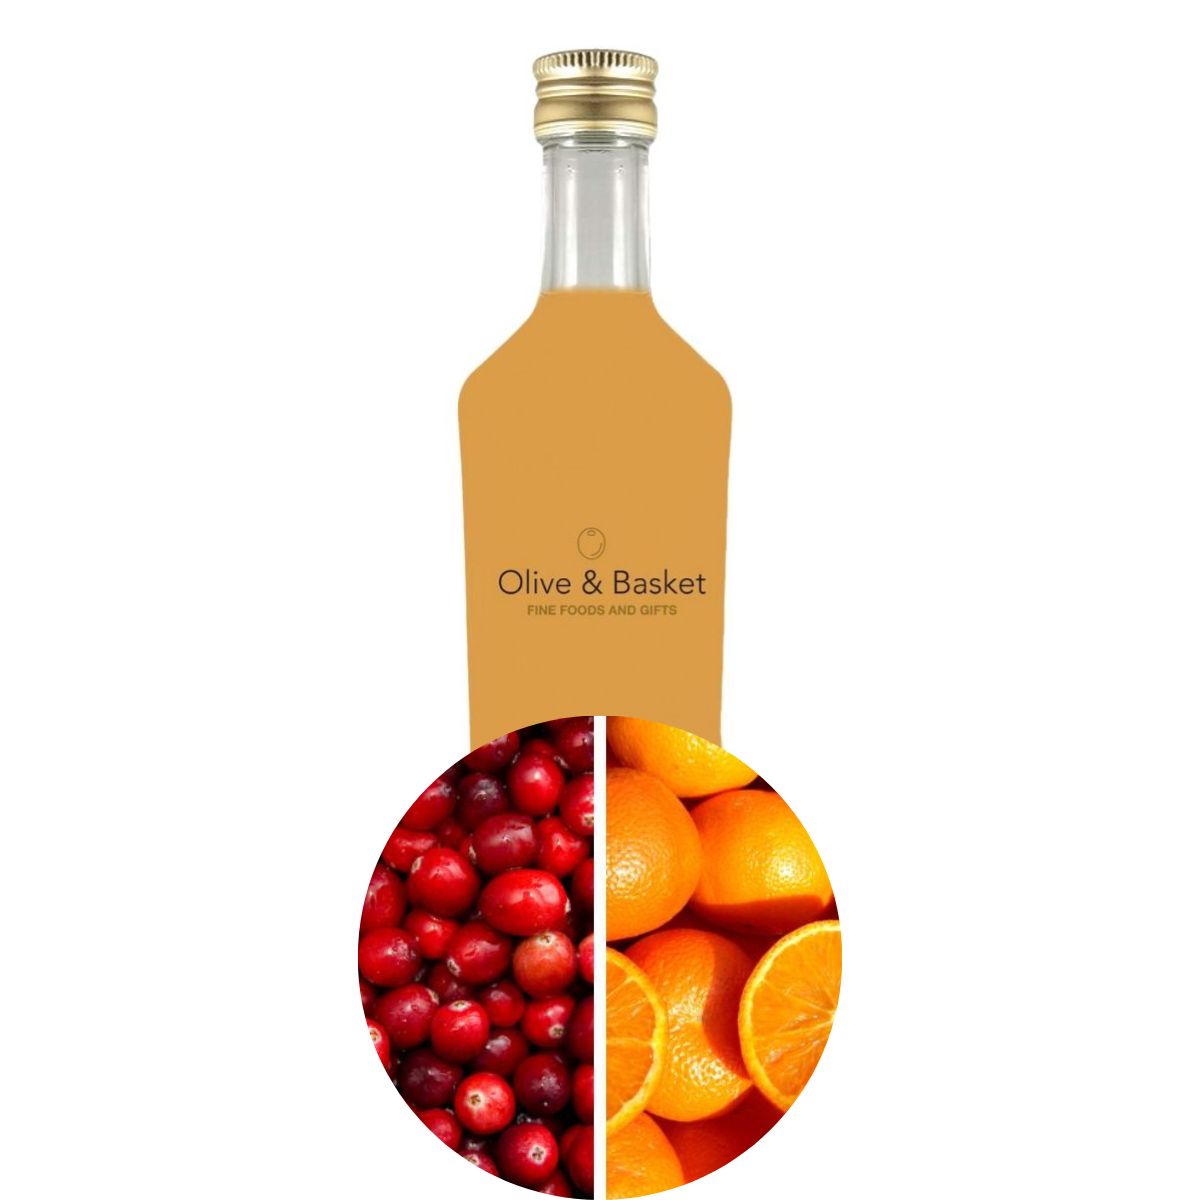 Cranberry Orange White Balsamic Vinegar- New Holiday Flavor